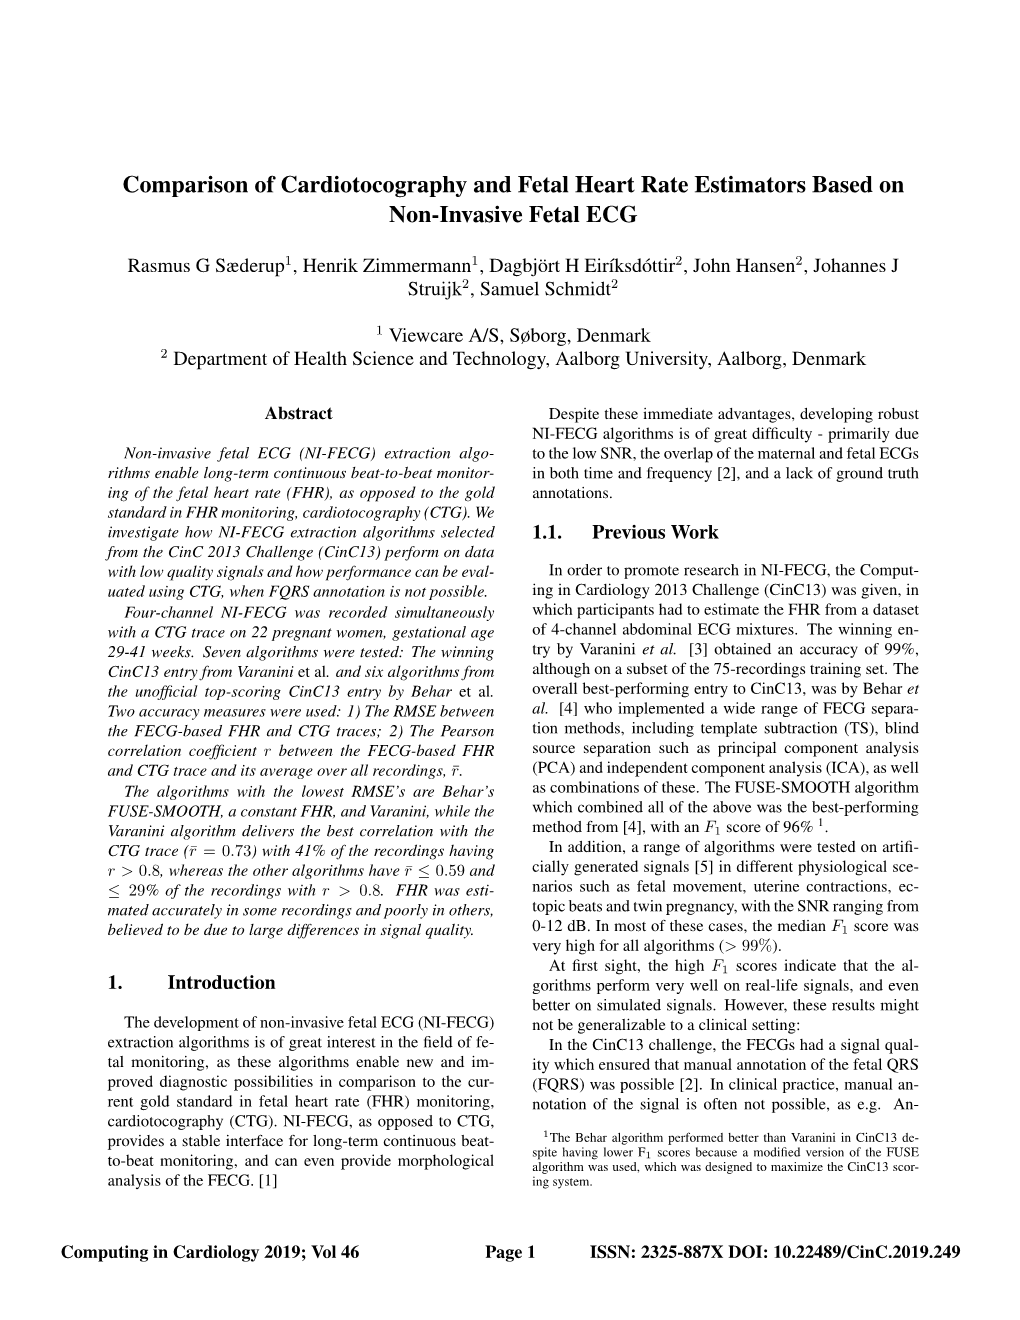 Comparison of Cardiotocography and Fetal Heart Rate Estimators Based on Non-Invasive Fetal ECG